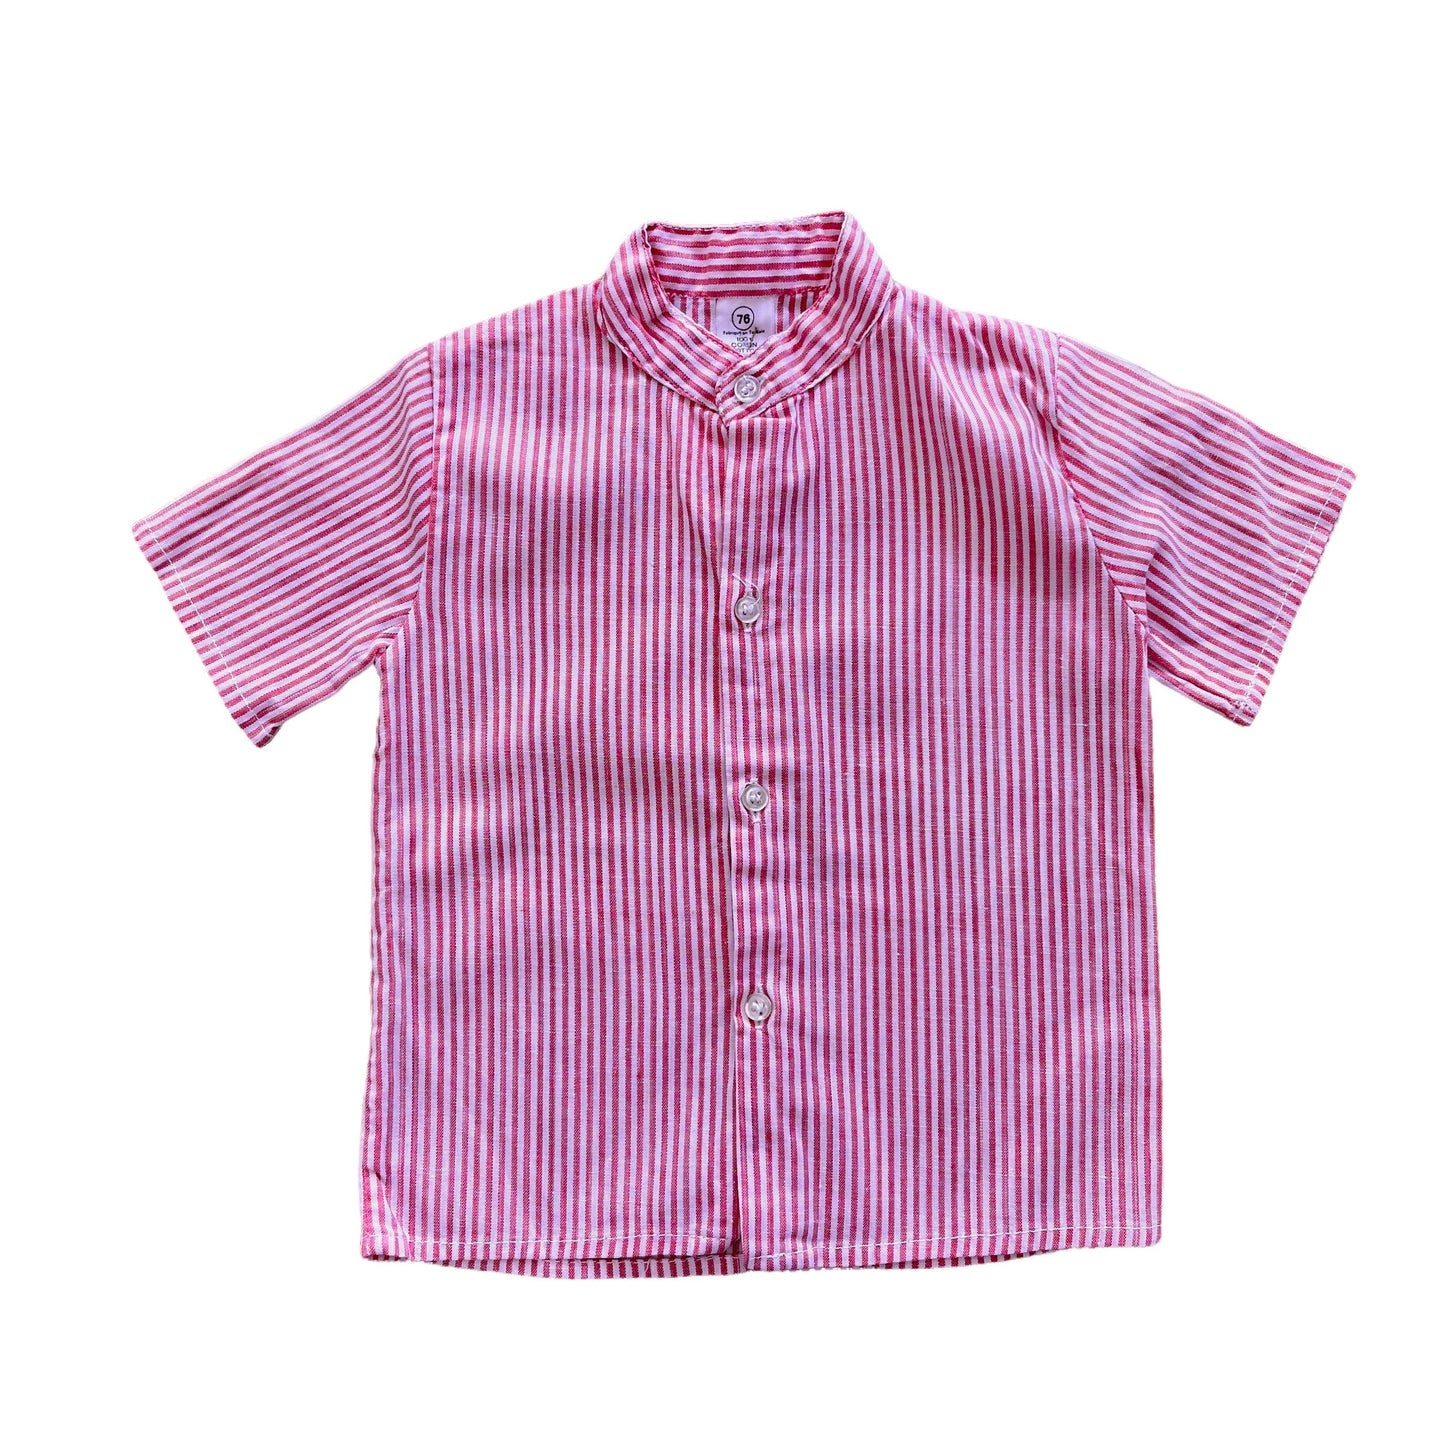 Vintage 70's Pink Striped Shirt / 6-9 Months